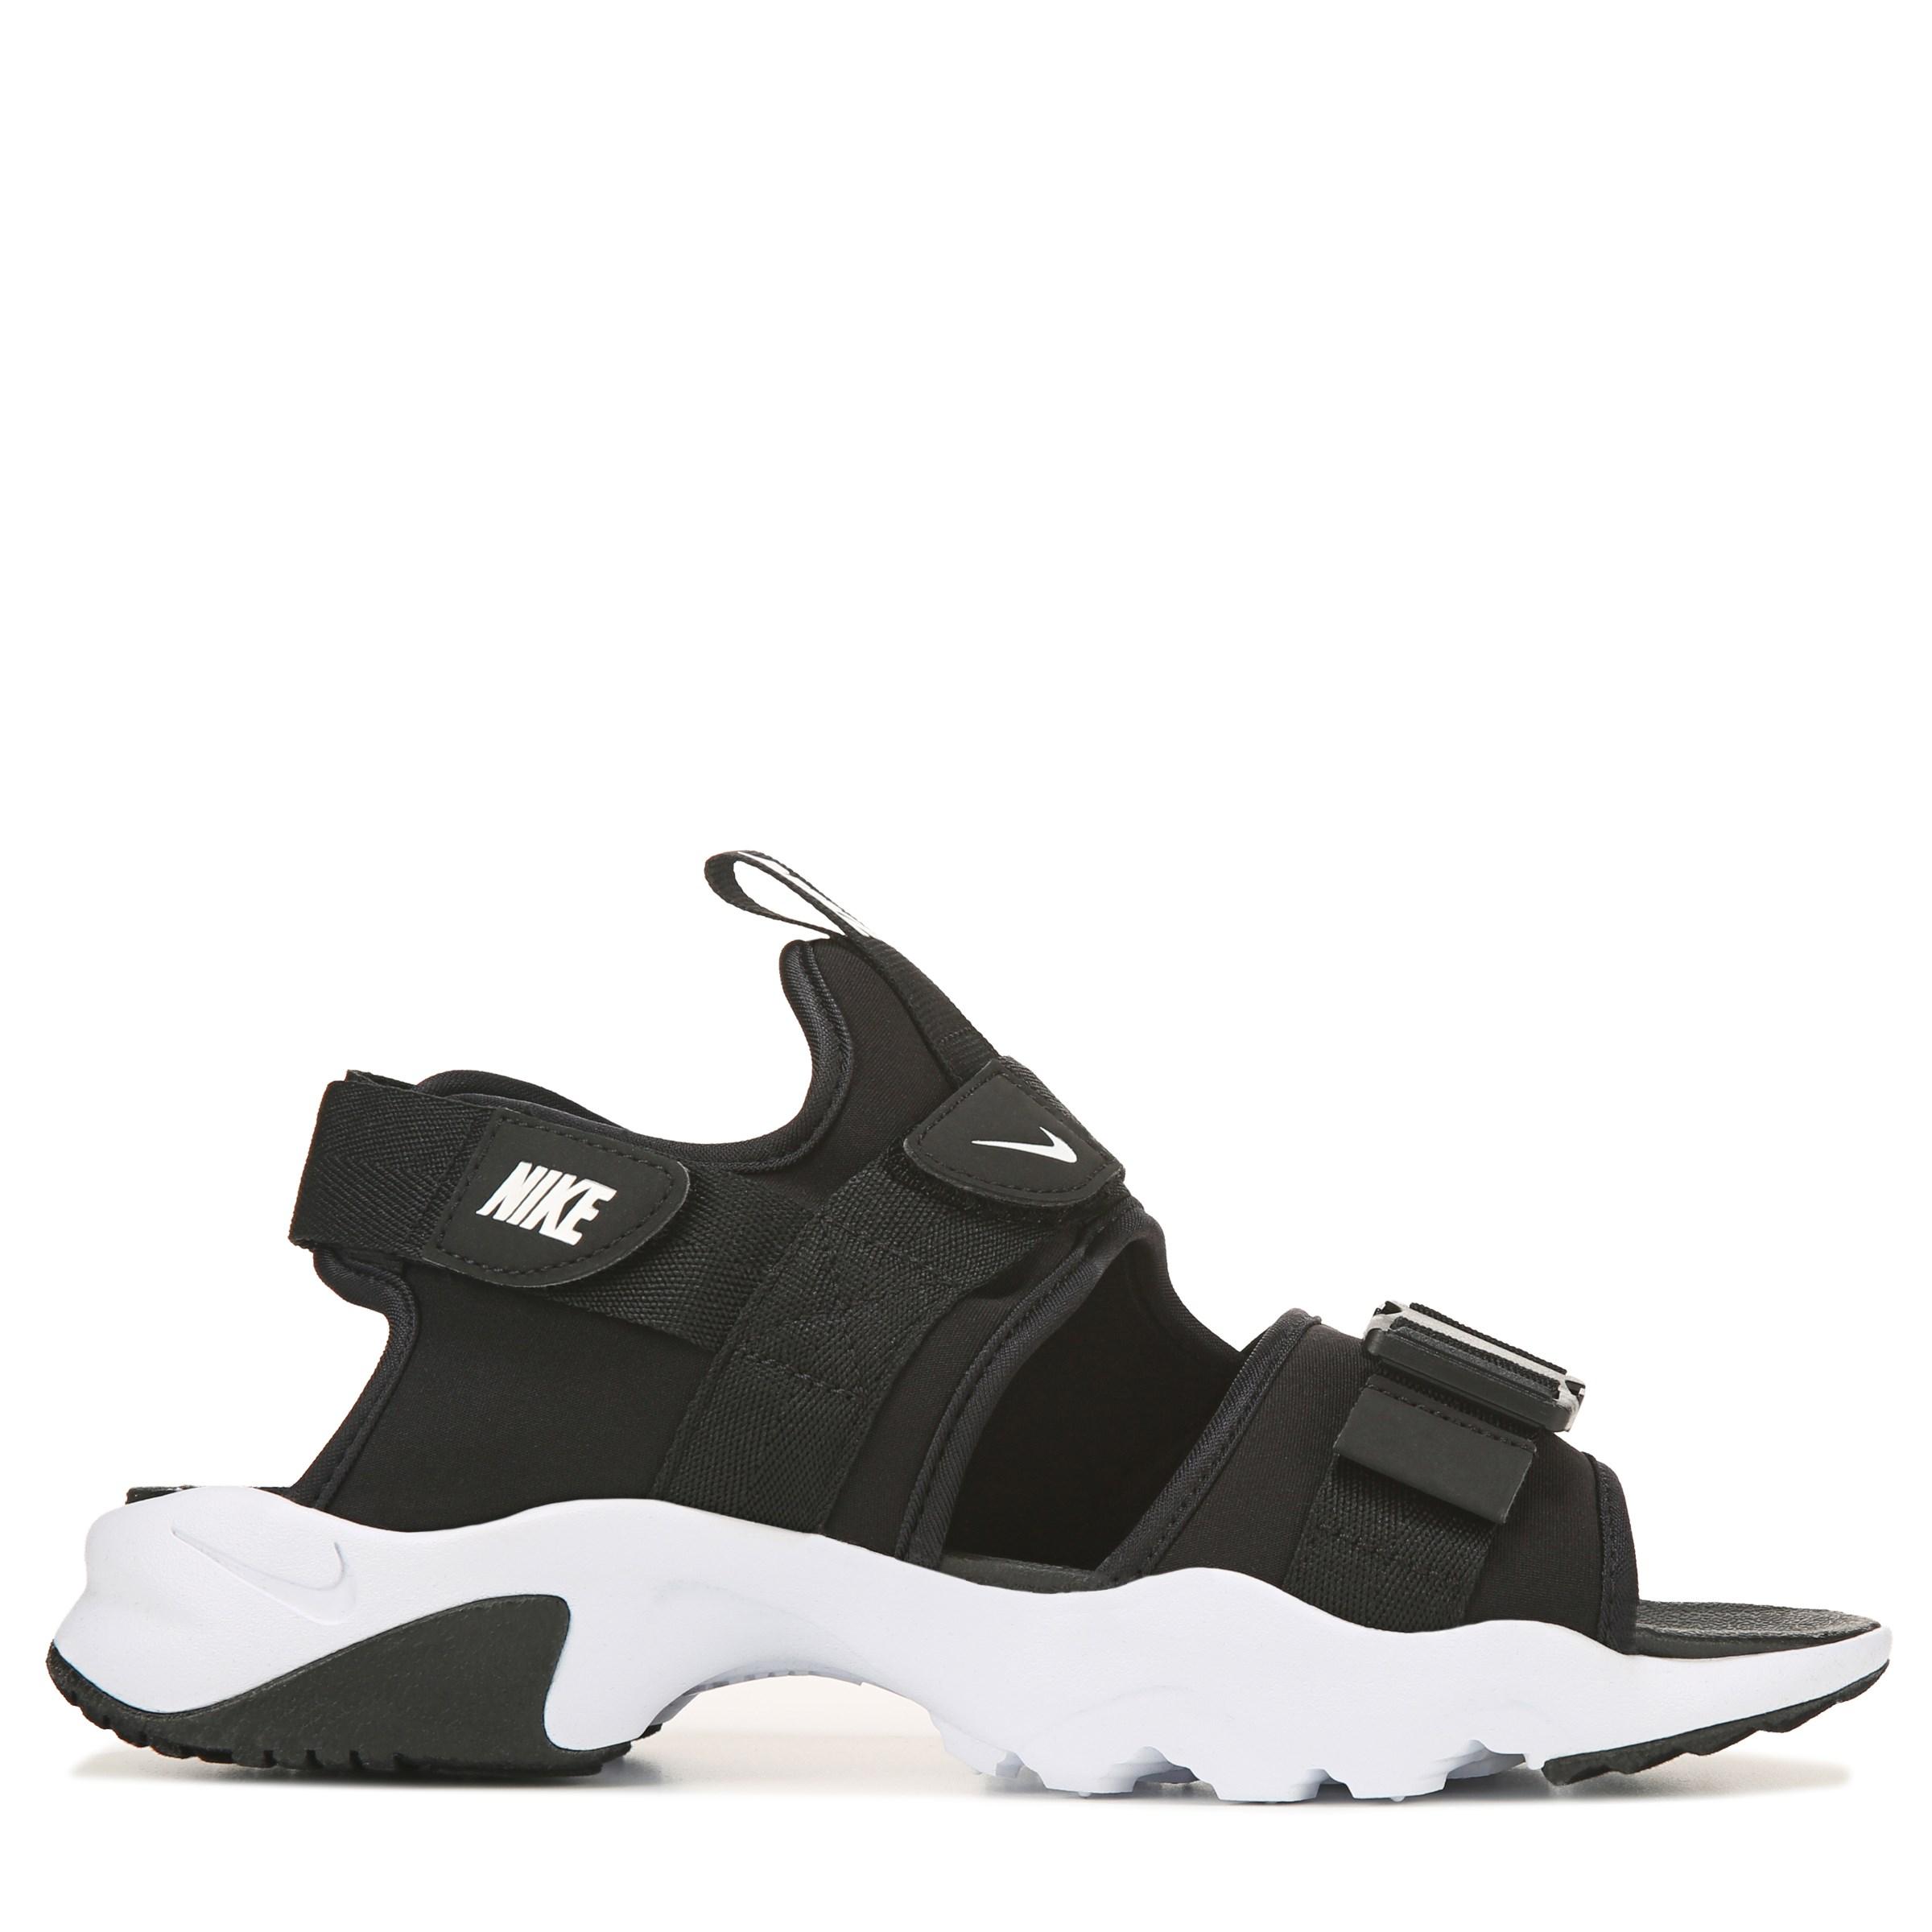 Nike Canyon Sandals in Black/White (Black) for Men - Lyst